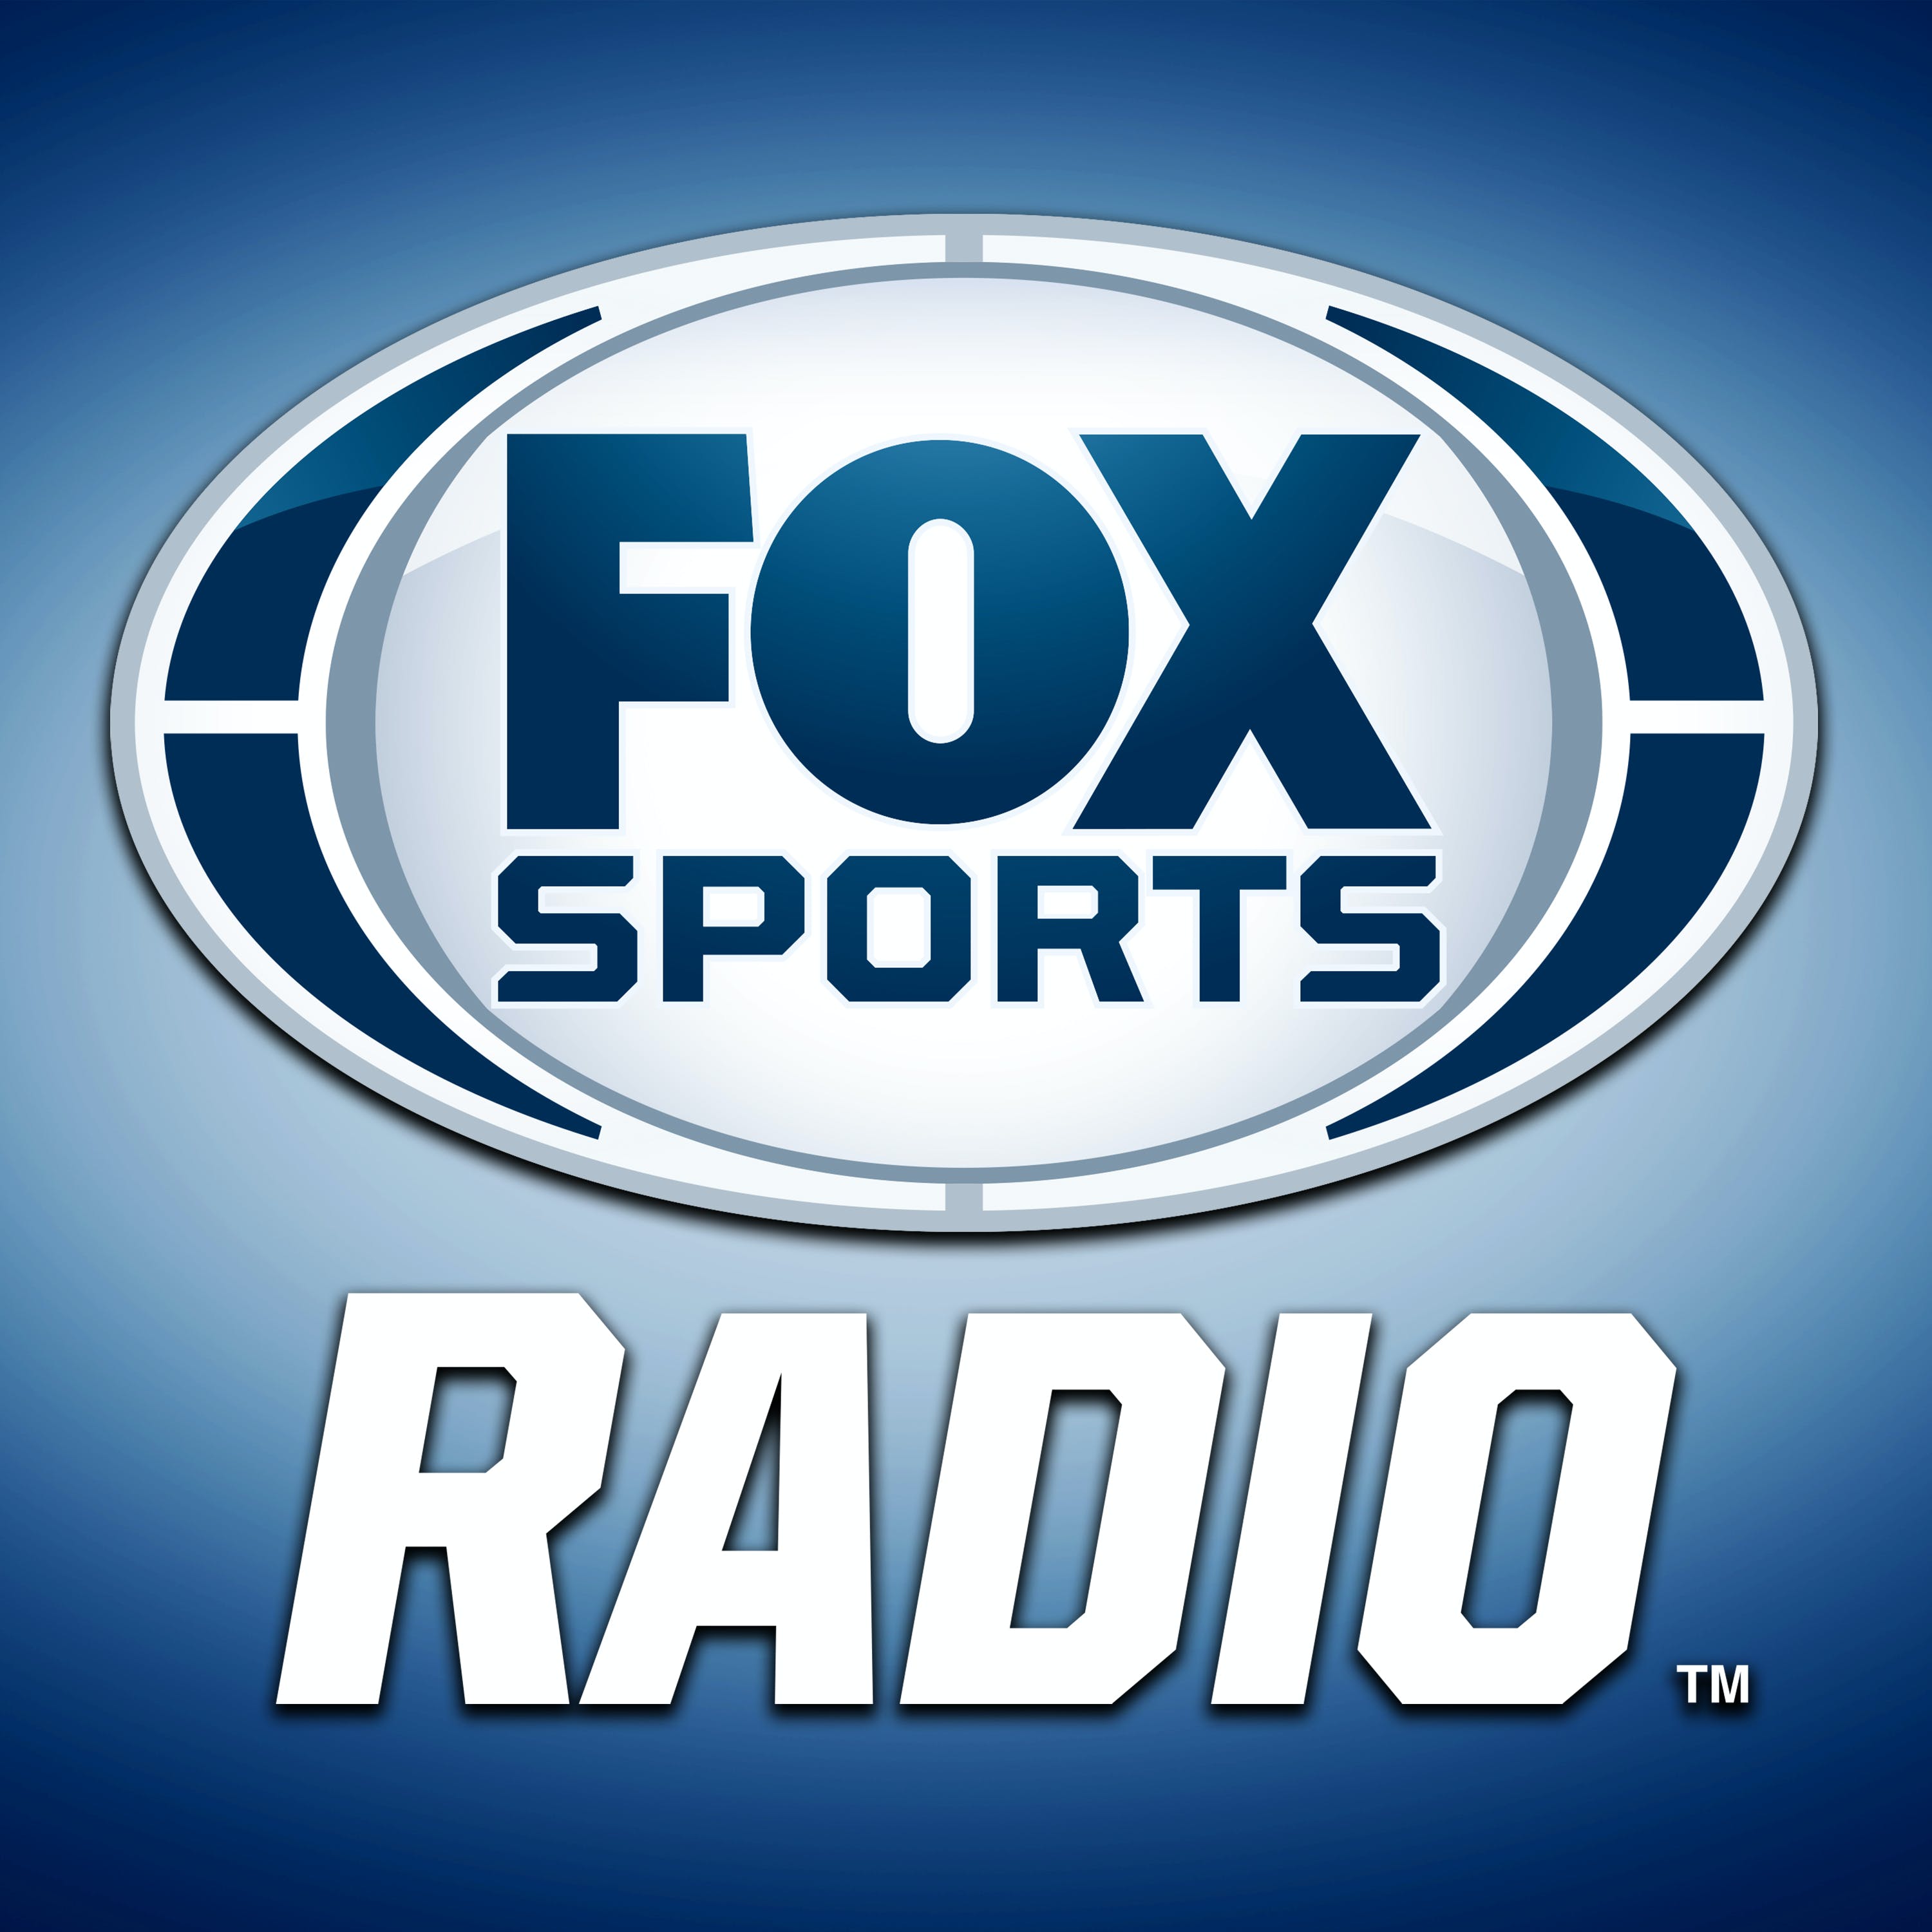 04/17/2021 - FOX Sports Saturday with Brian Noe and Ephraim Salaam